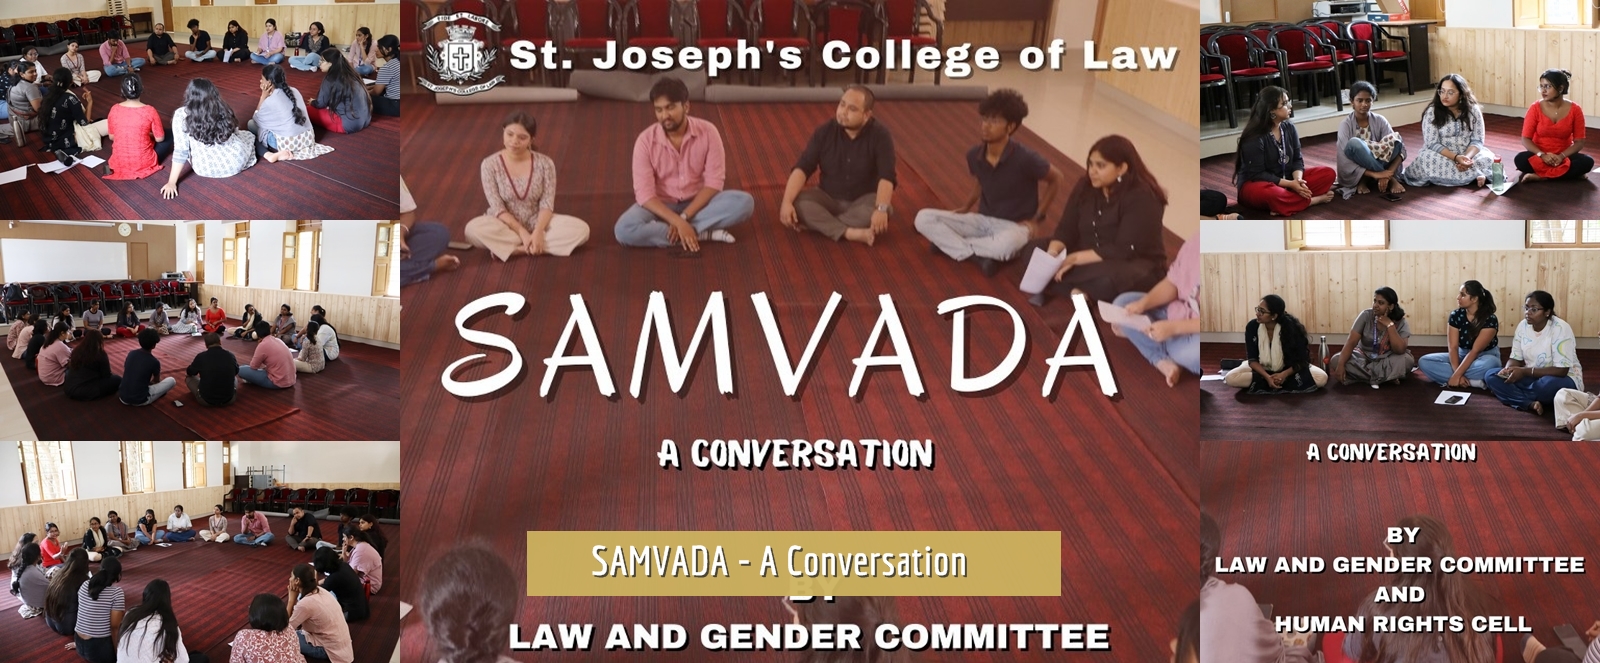 SAMVADA - A Conversation